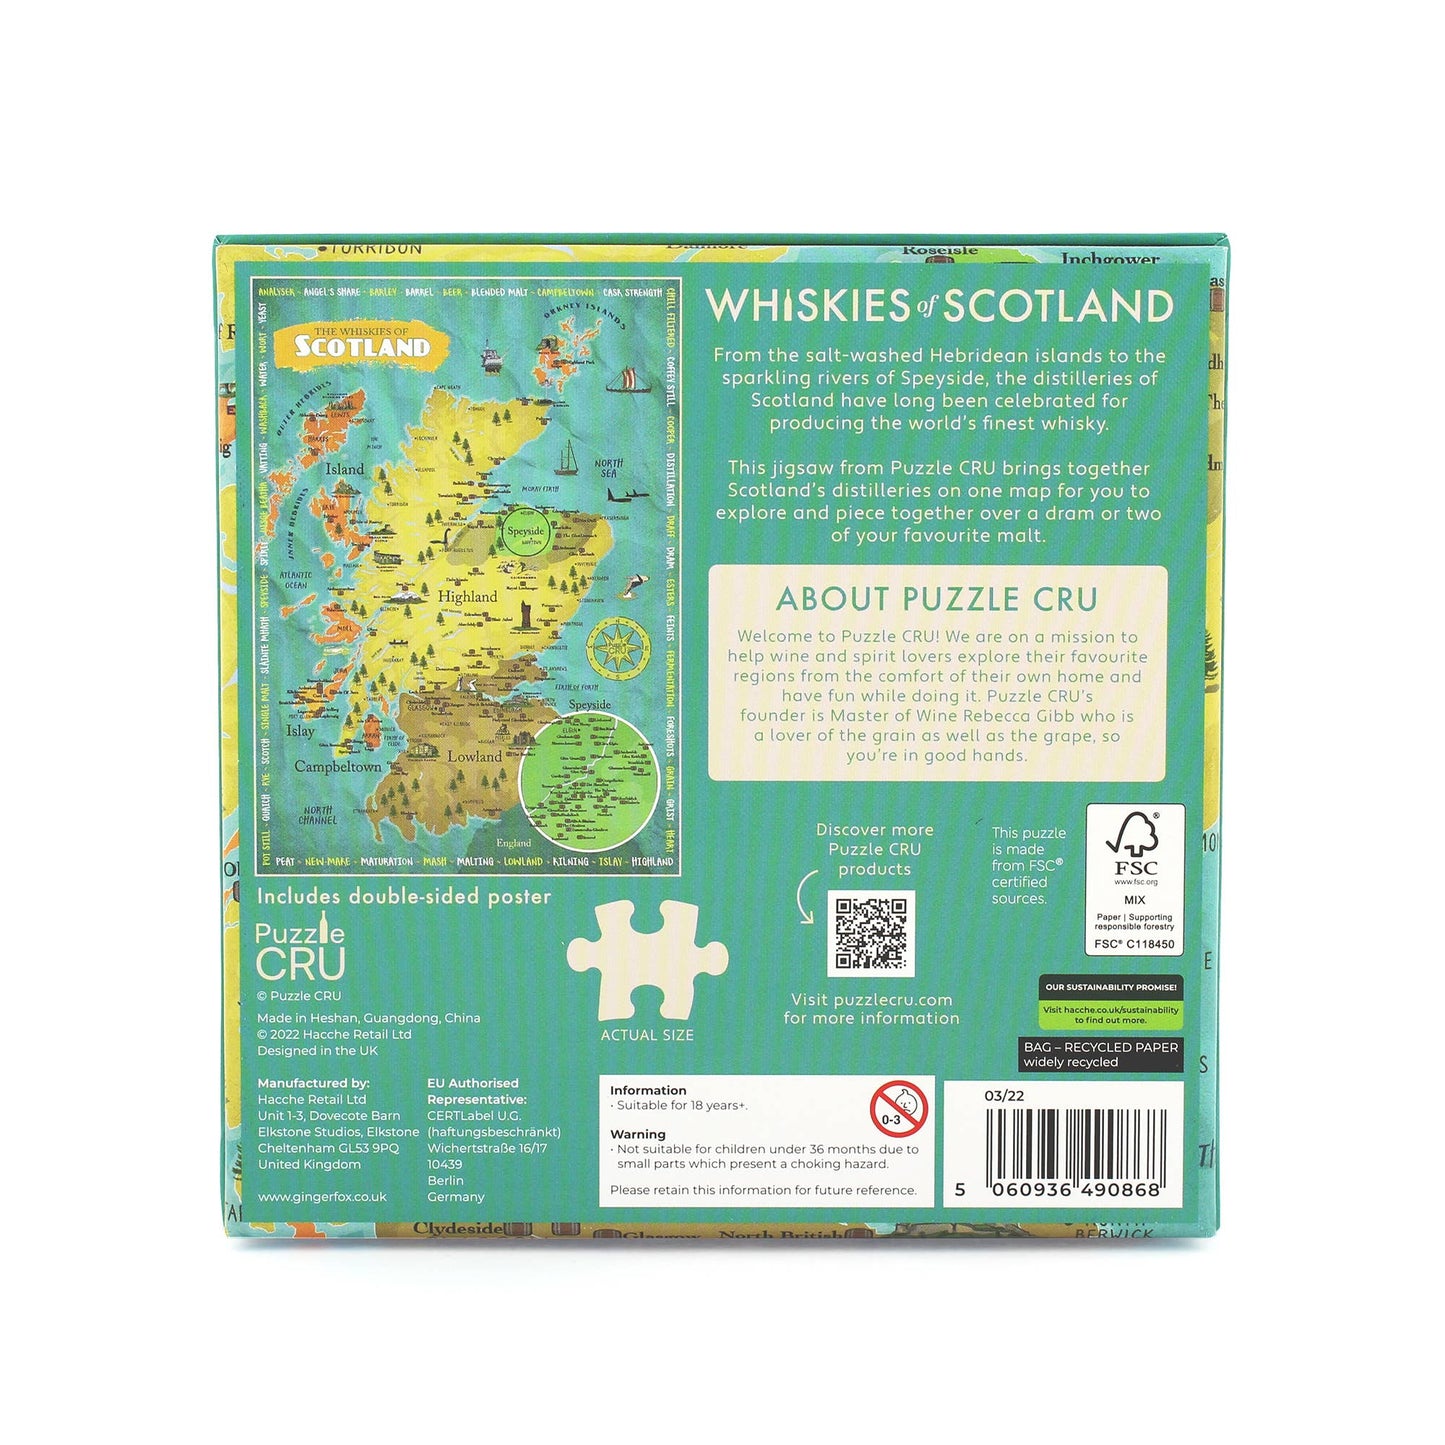 Whiskies of Scotland Puzzle Cru